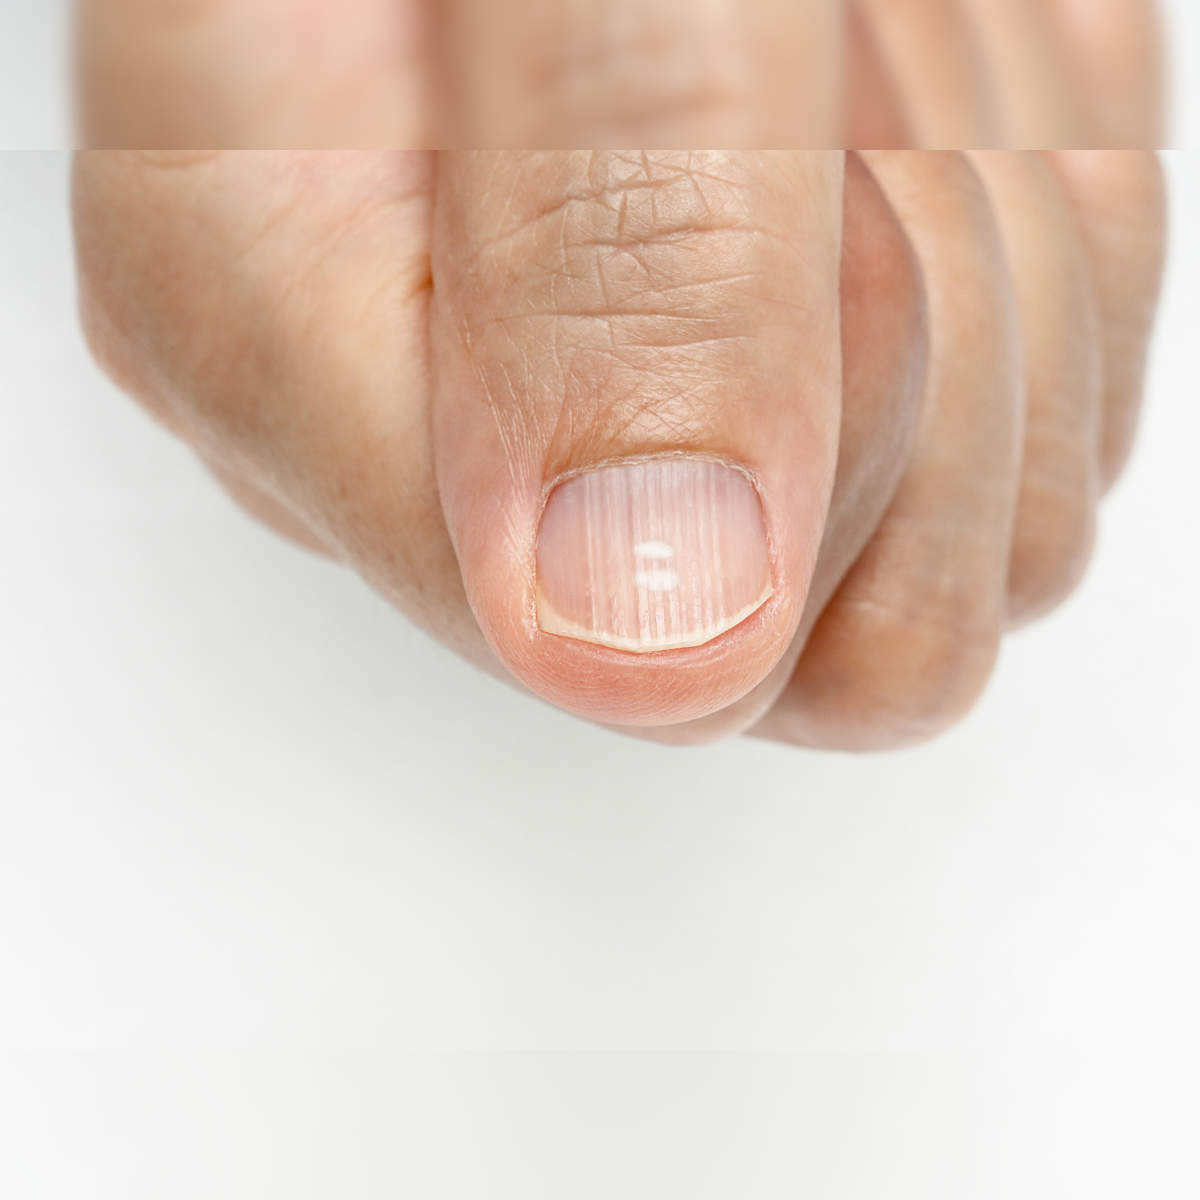 Does Gel Polish Help Nails Grow – ORLY